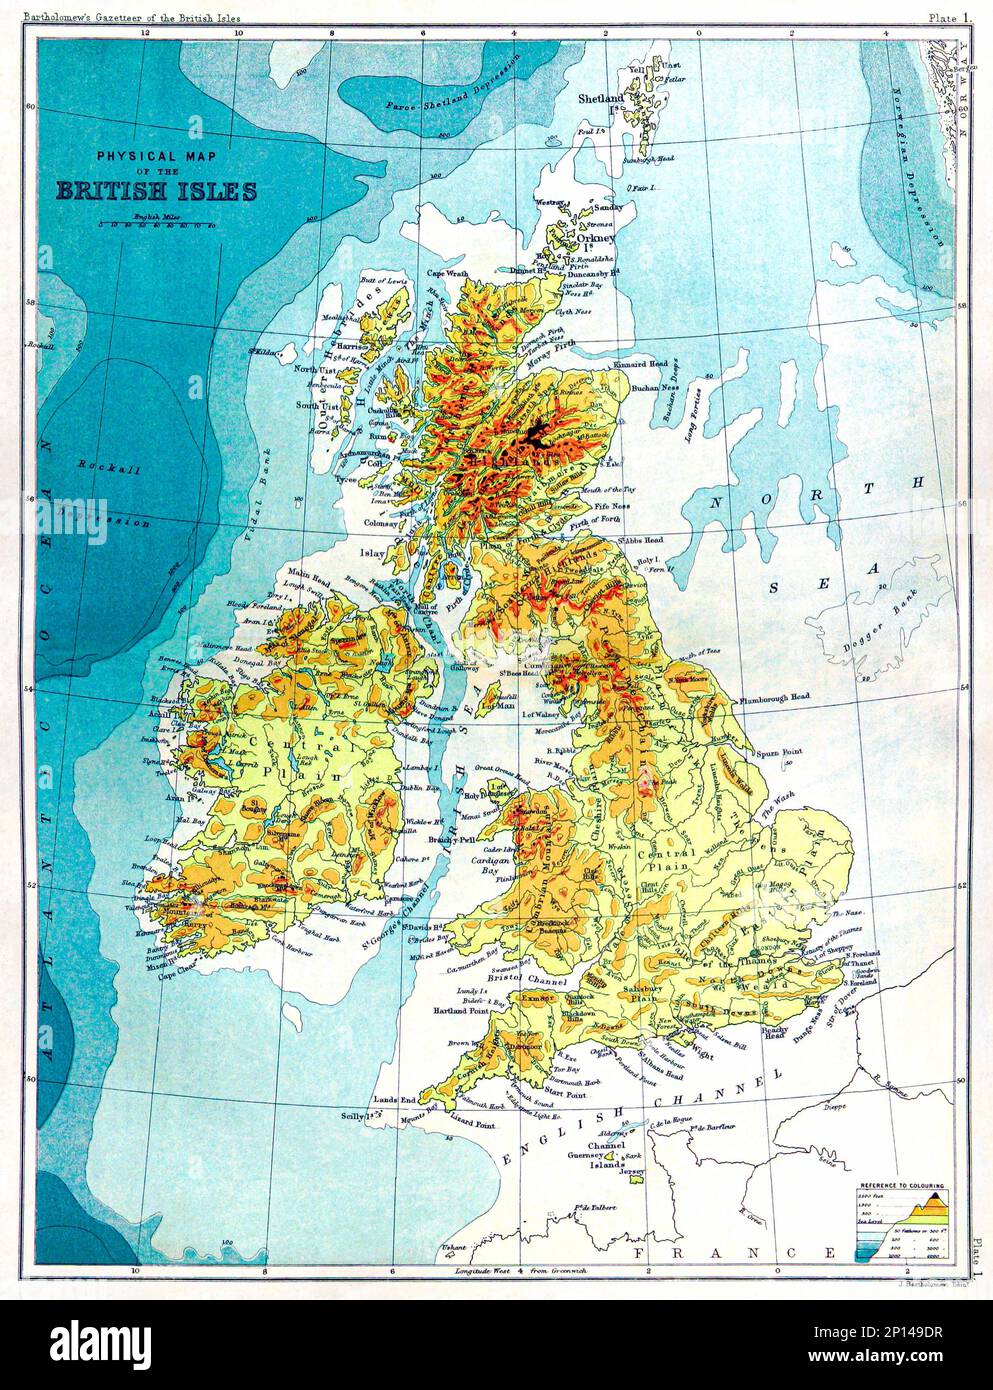 Gazetteer of the British Isles, Statistical and topographical (1887) di John Bartholomew. Originale dalla British Library. Foto Stock